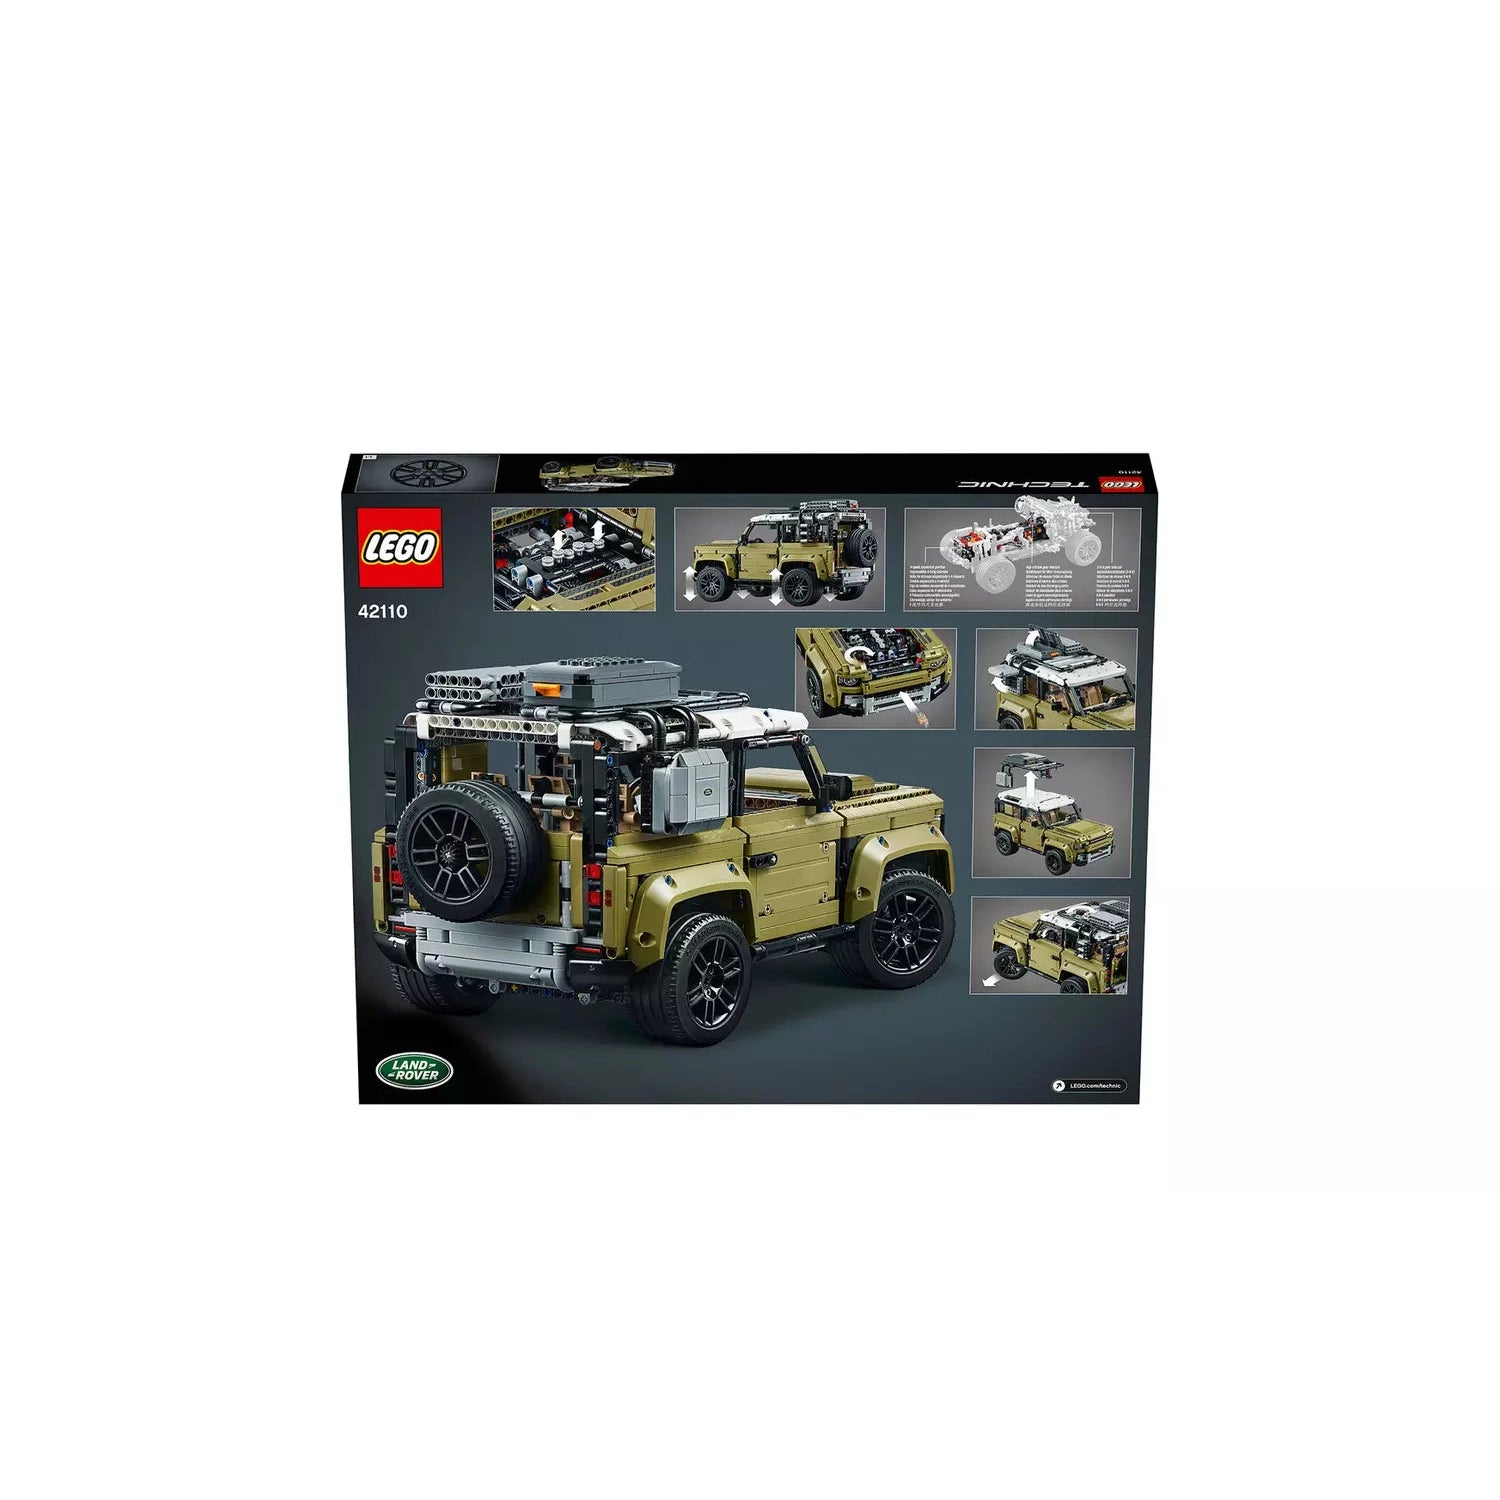 Lego 42110 Technic Land Rover Defender Collector's Model Car